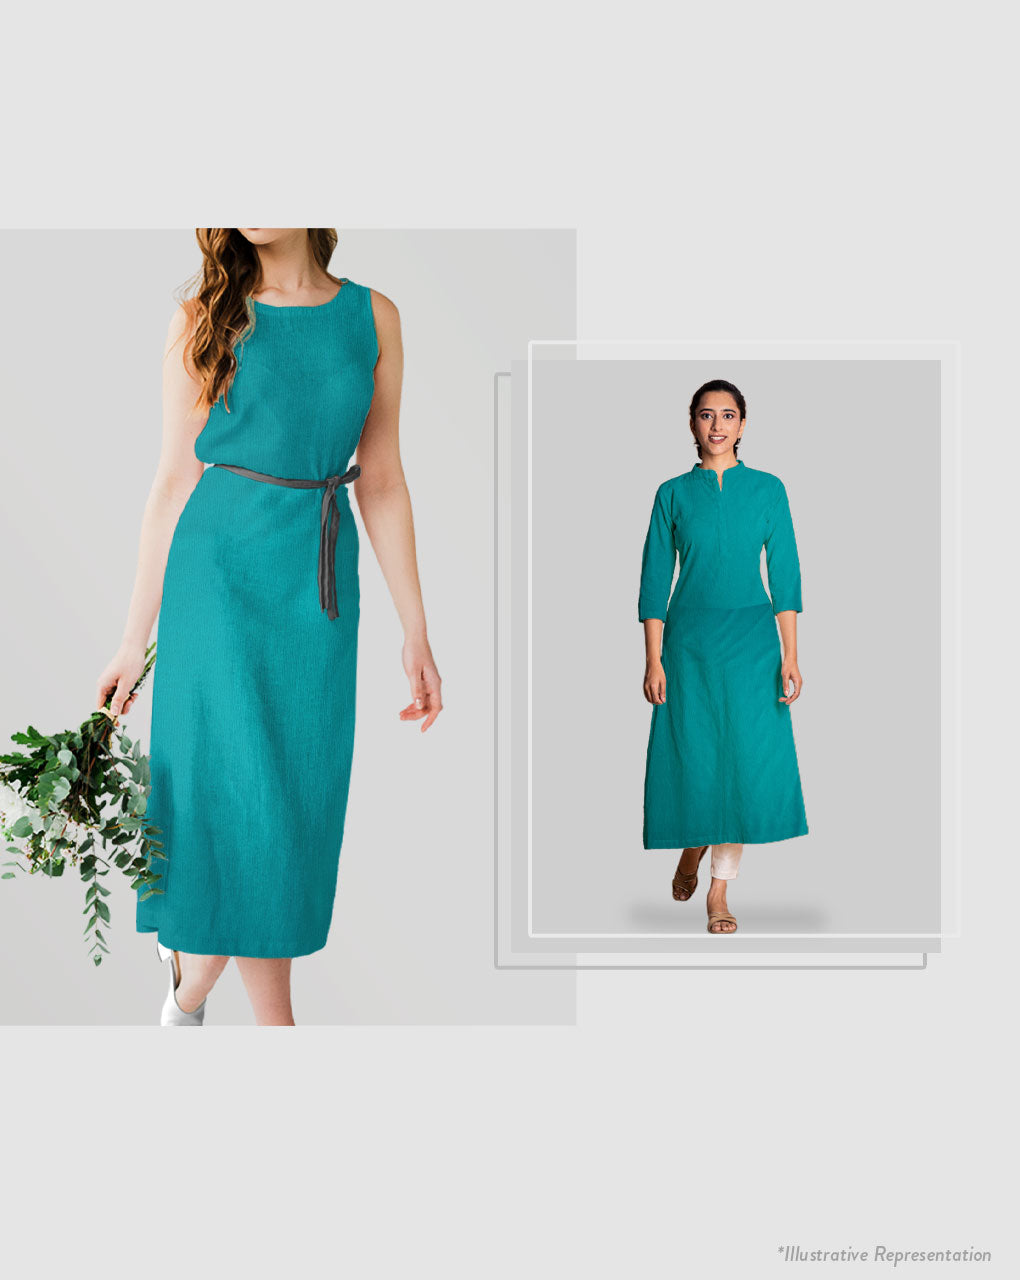 Turquoise Plain Rayon Fabric